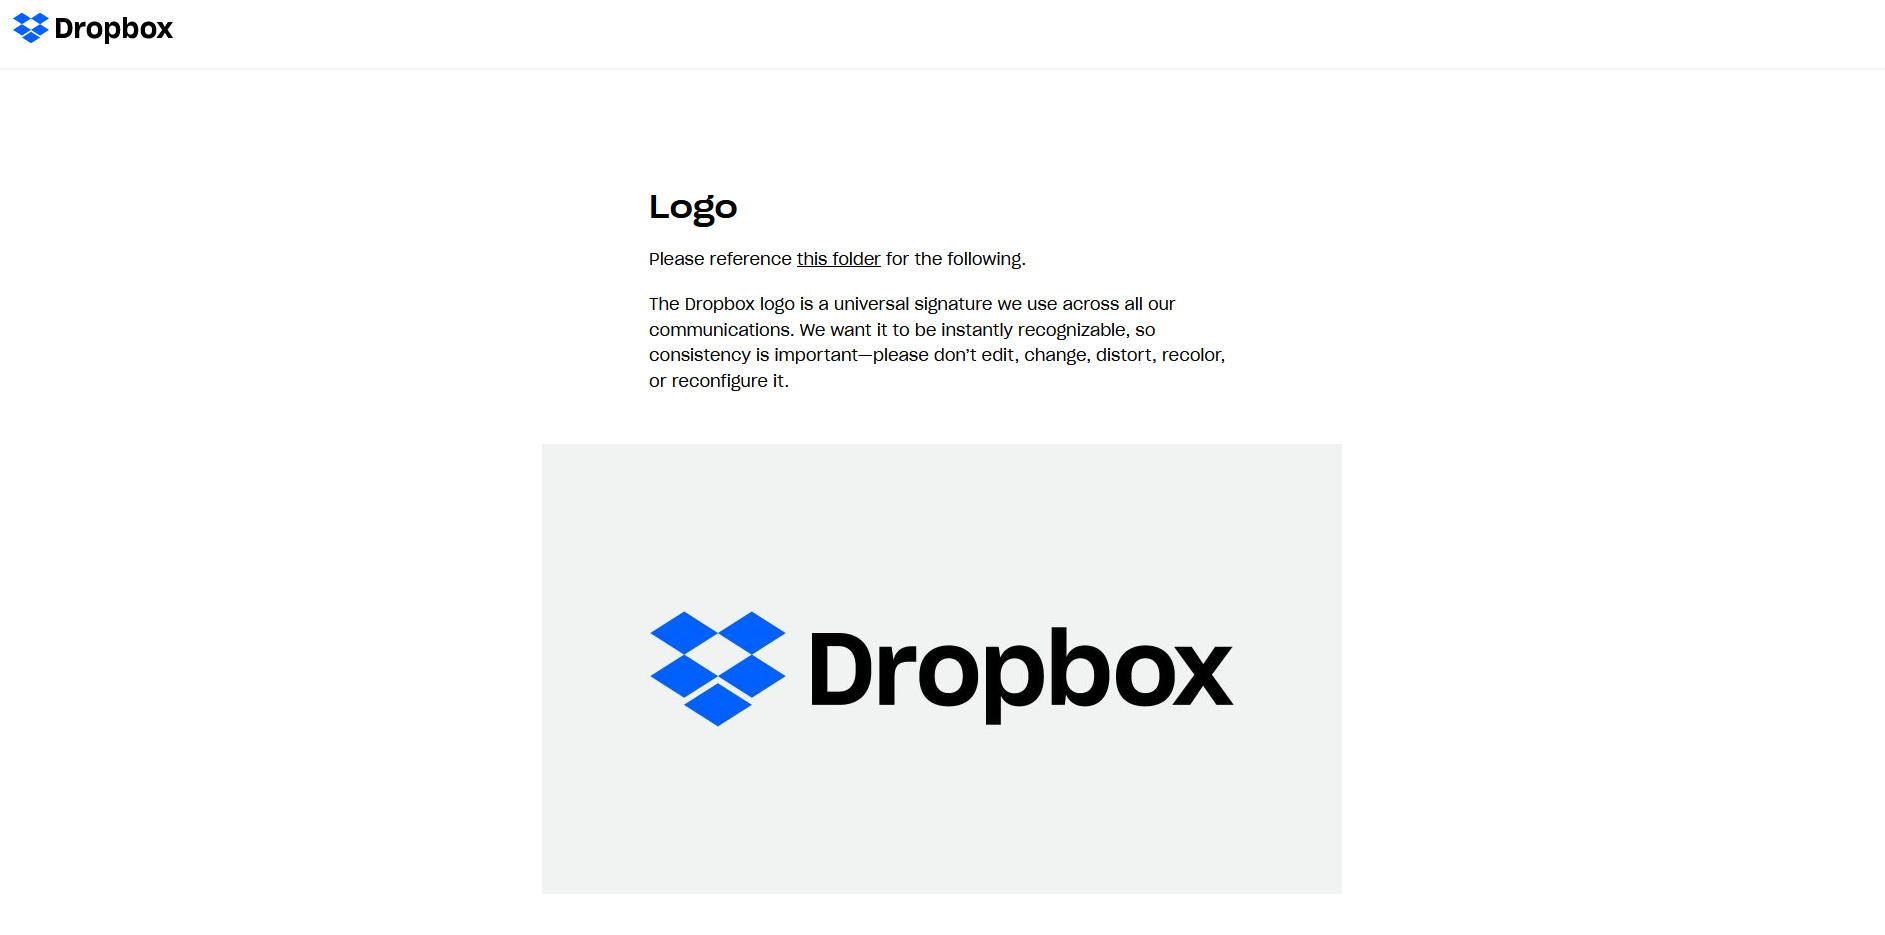 Dropbox's Brand Guide